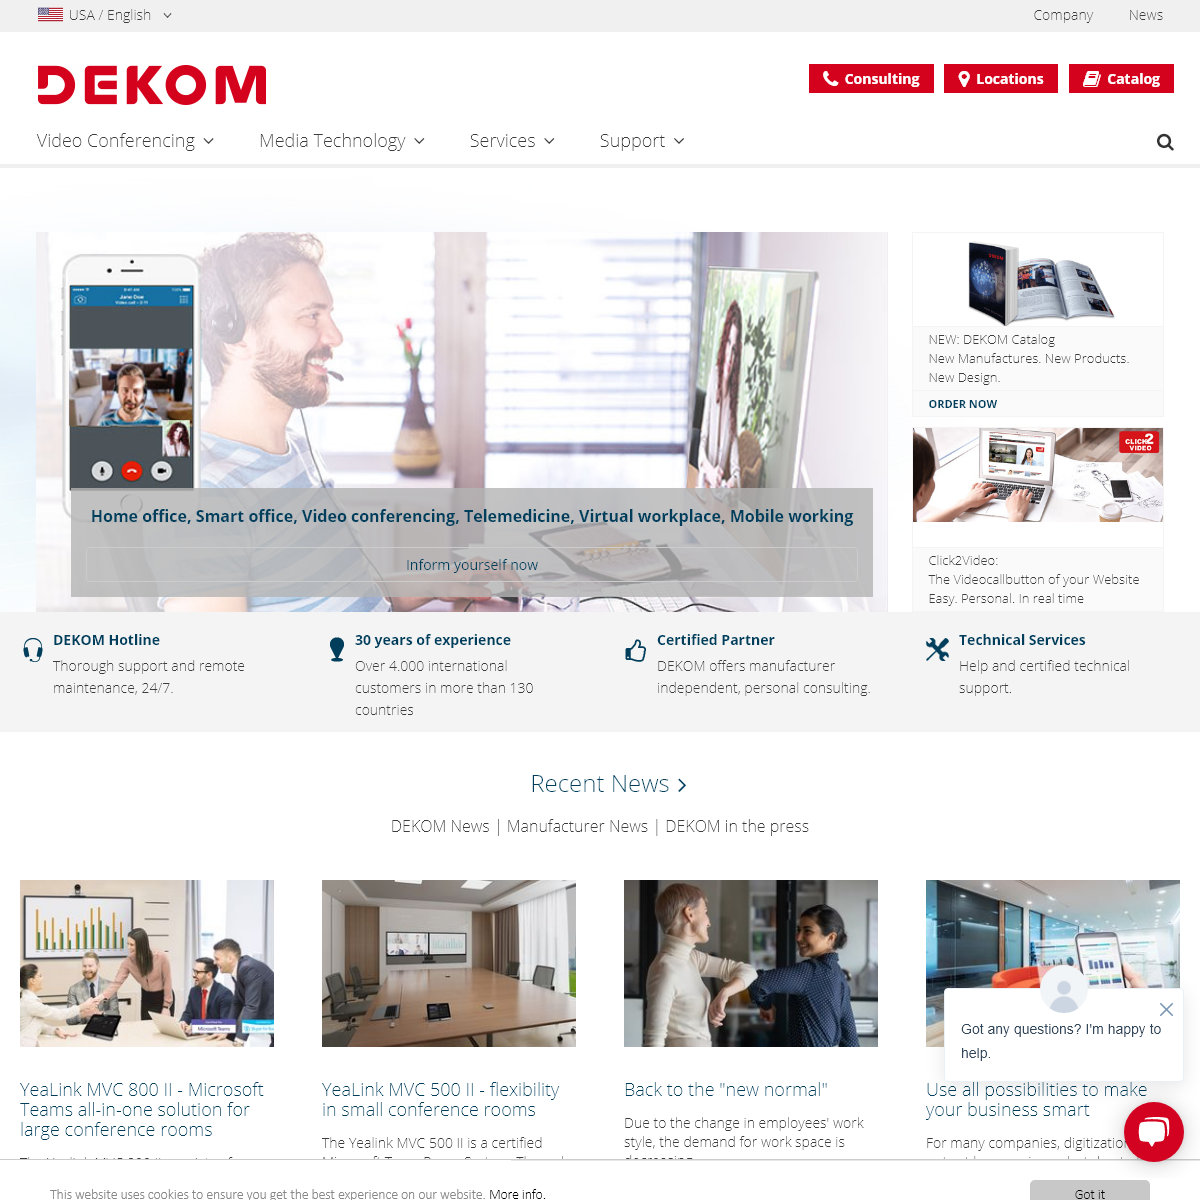 A complete backup of dekom.com